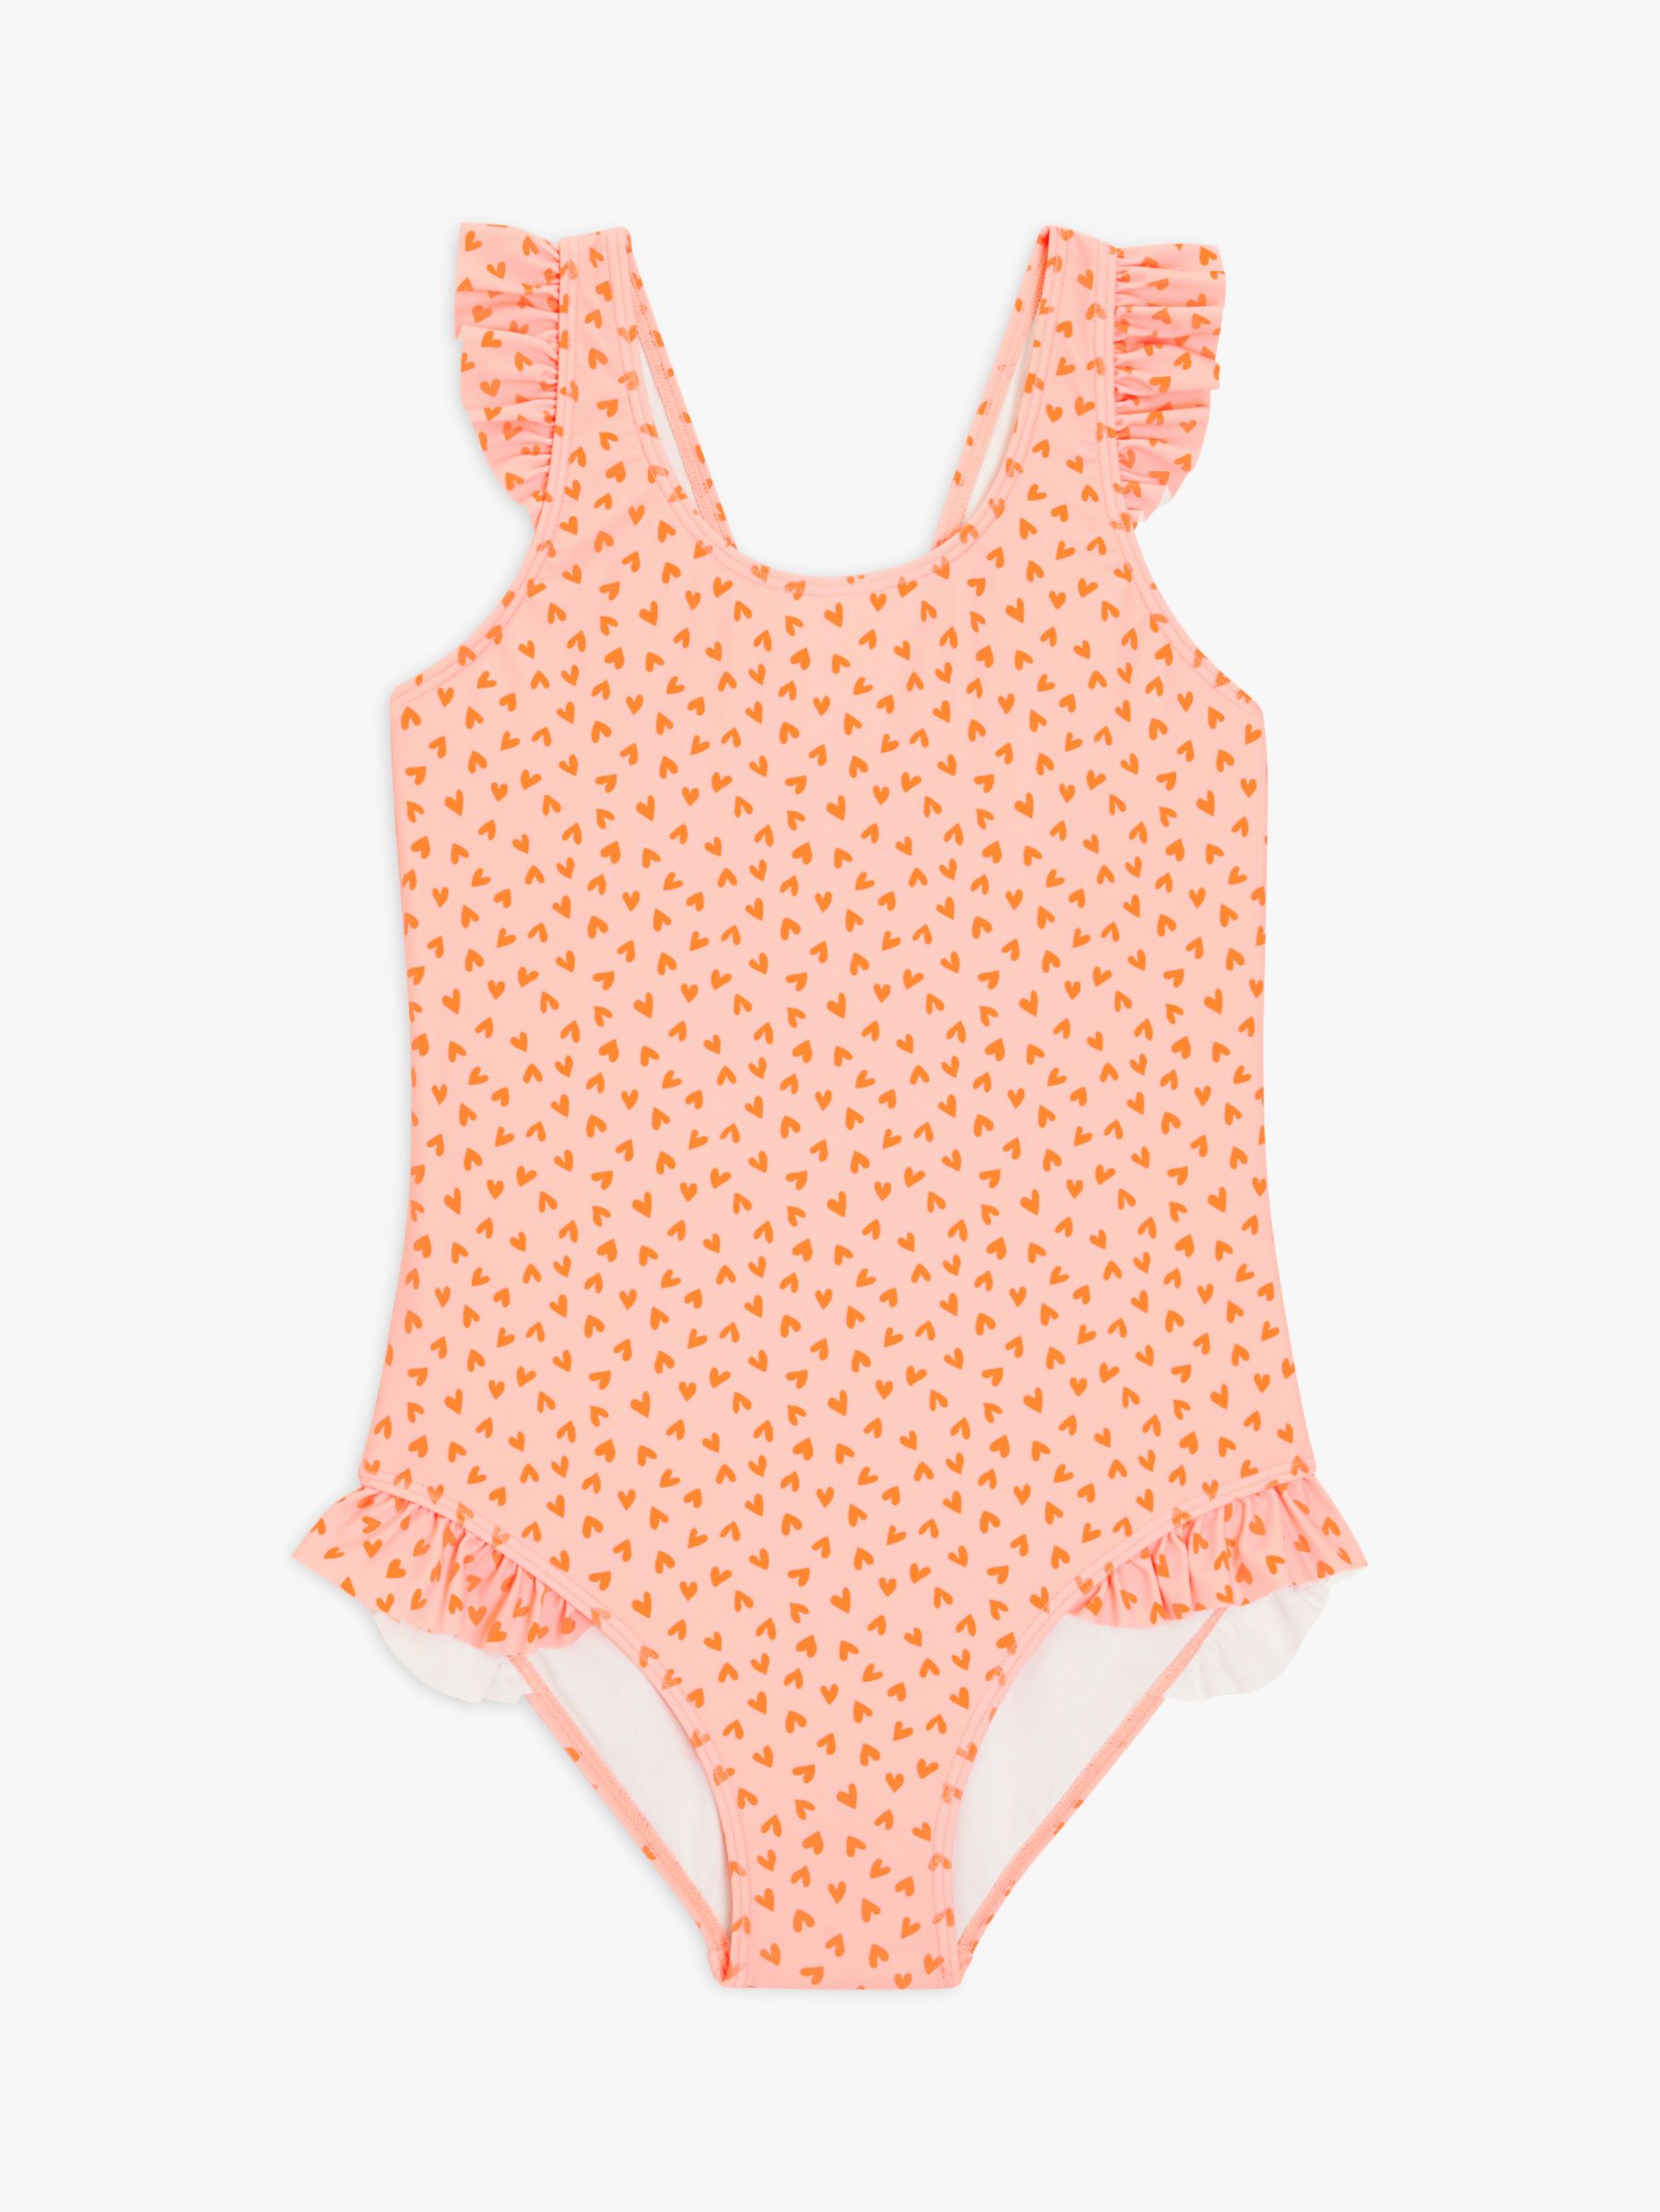 John Lewis Kids' Ditsy Heart Swimsuit, Orange